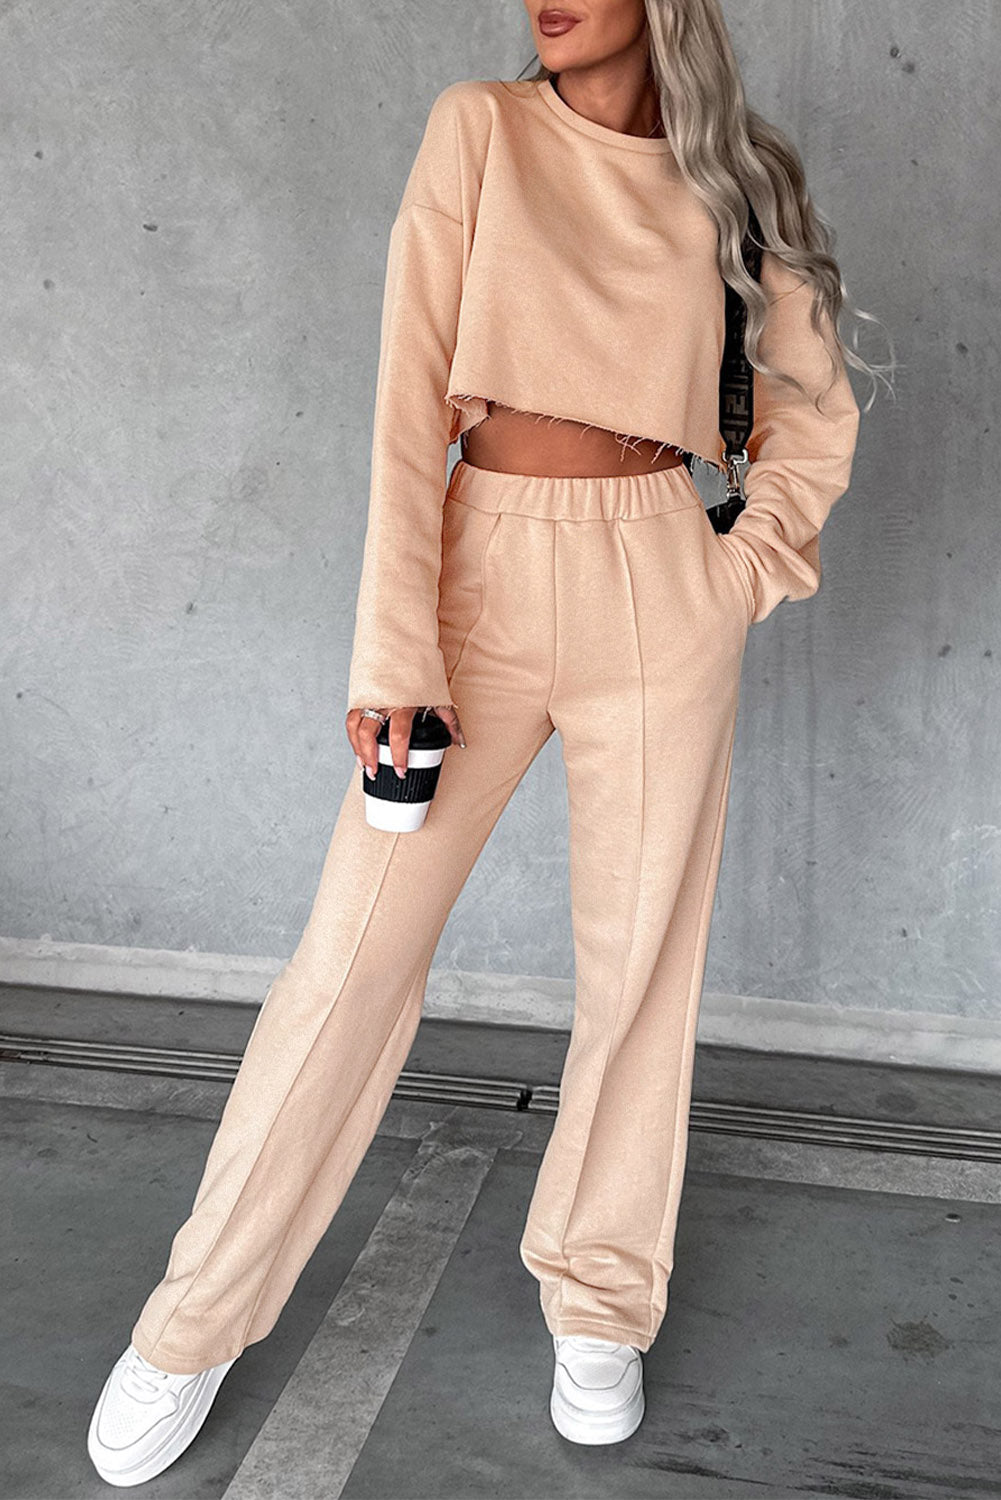 Khaki 50%Polyester+50%Cotton - Khaki Long Sleeve Distressed Crop Top Wide Leg Pants Outfit Set - womens pants set at TFC&H Co.